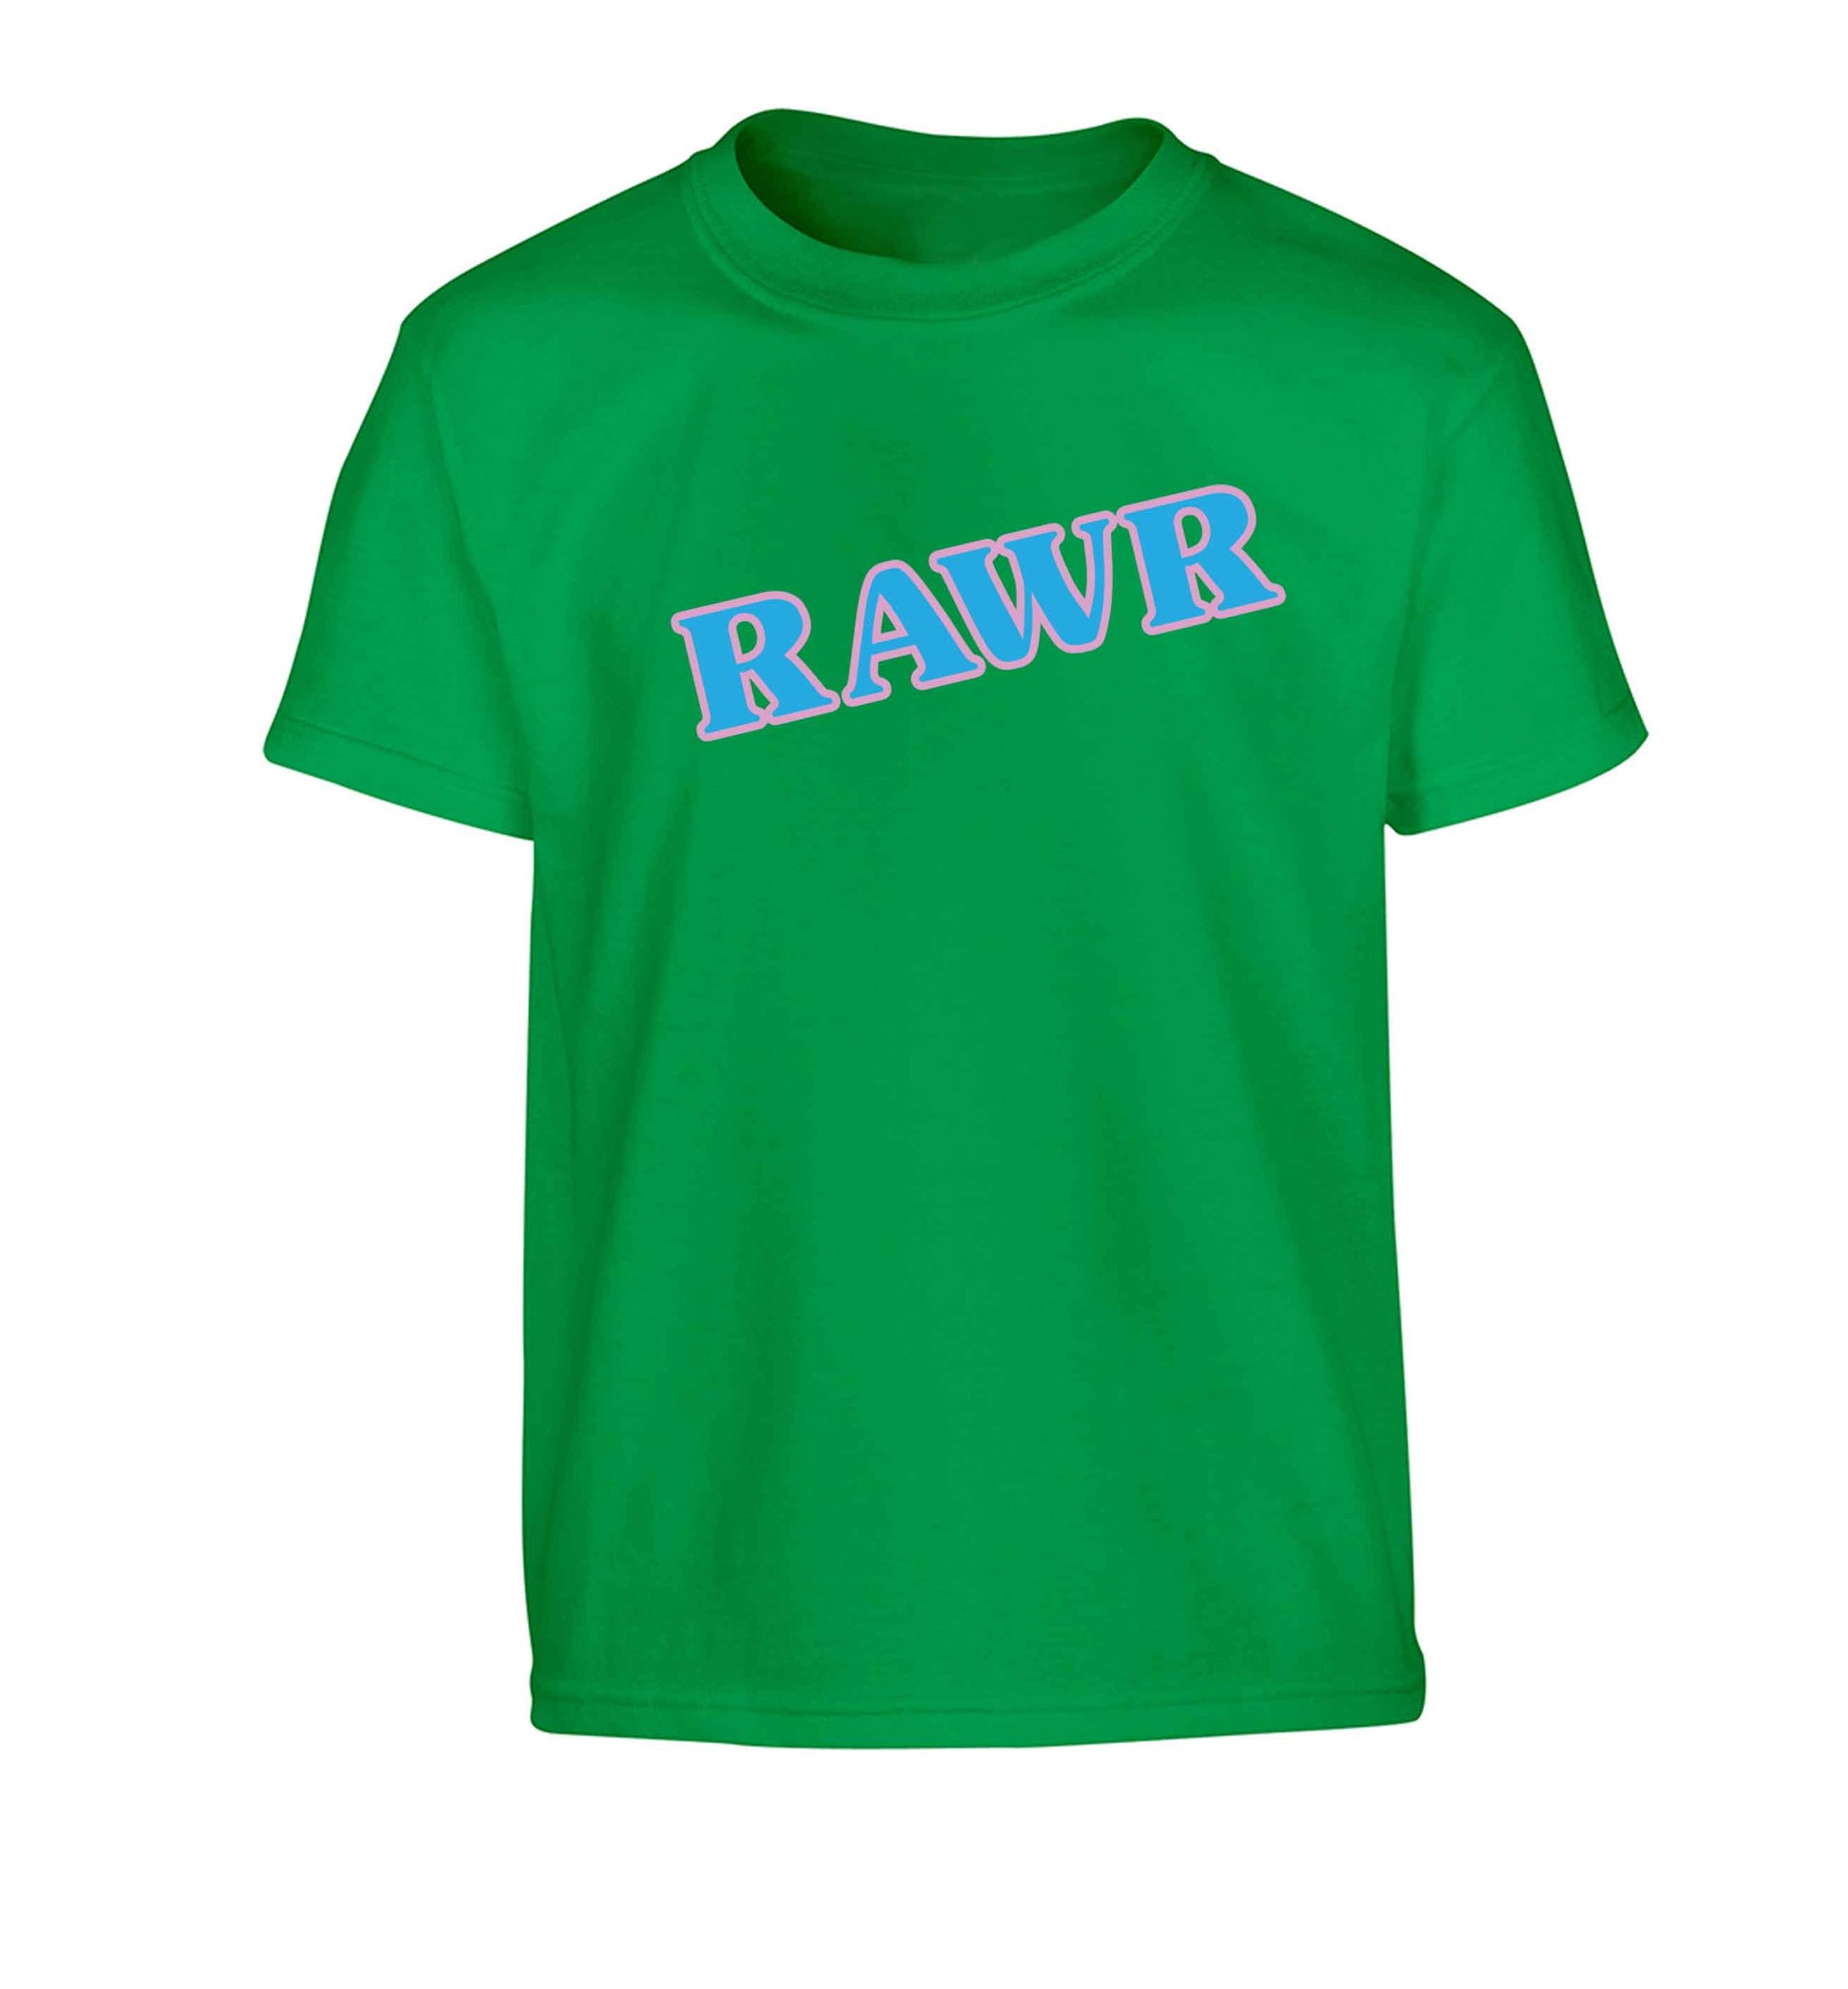 Rawr Children's green Tshirt 12-13 Years